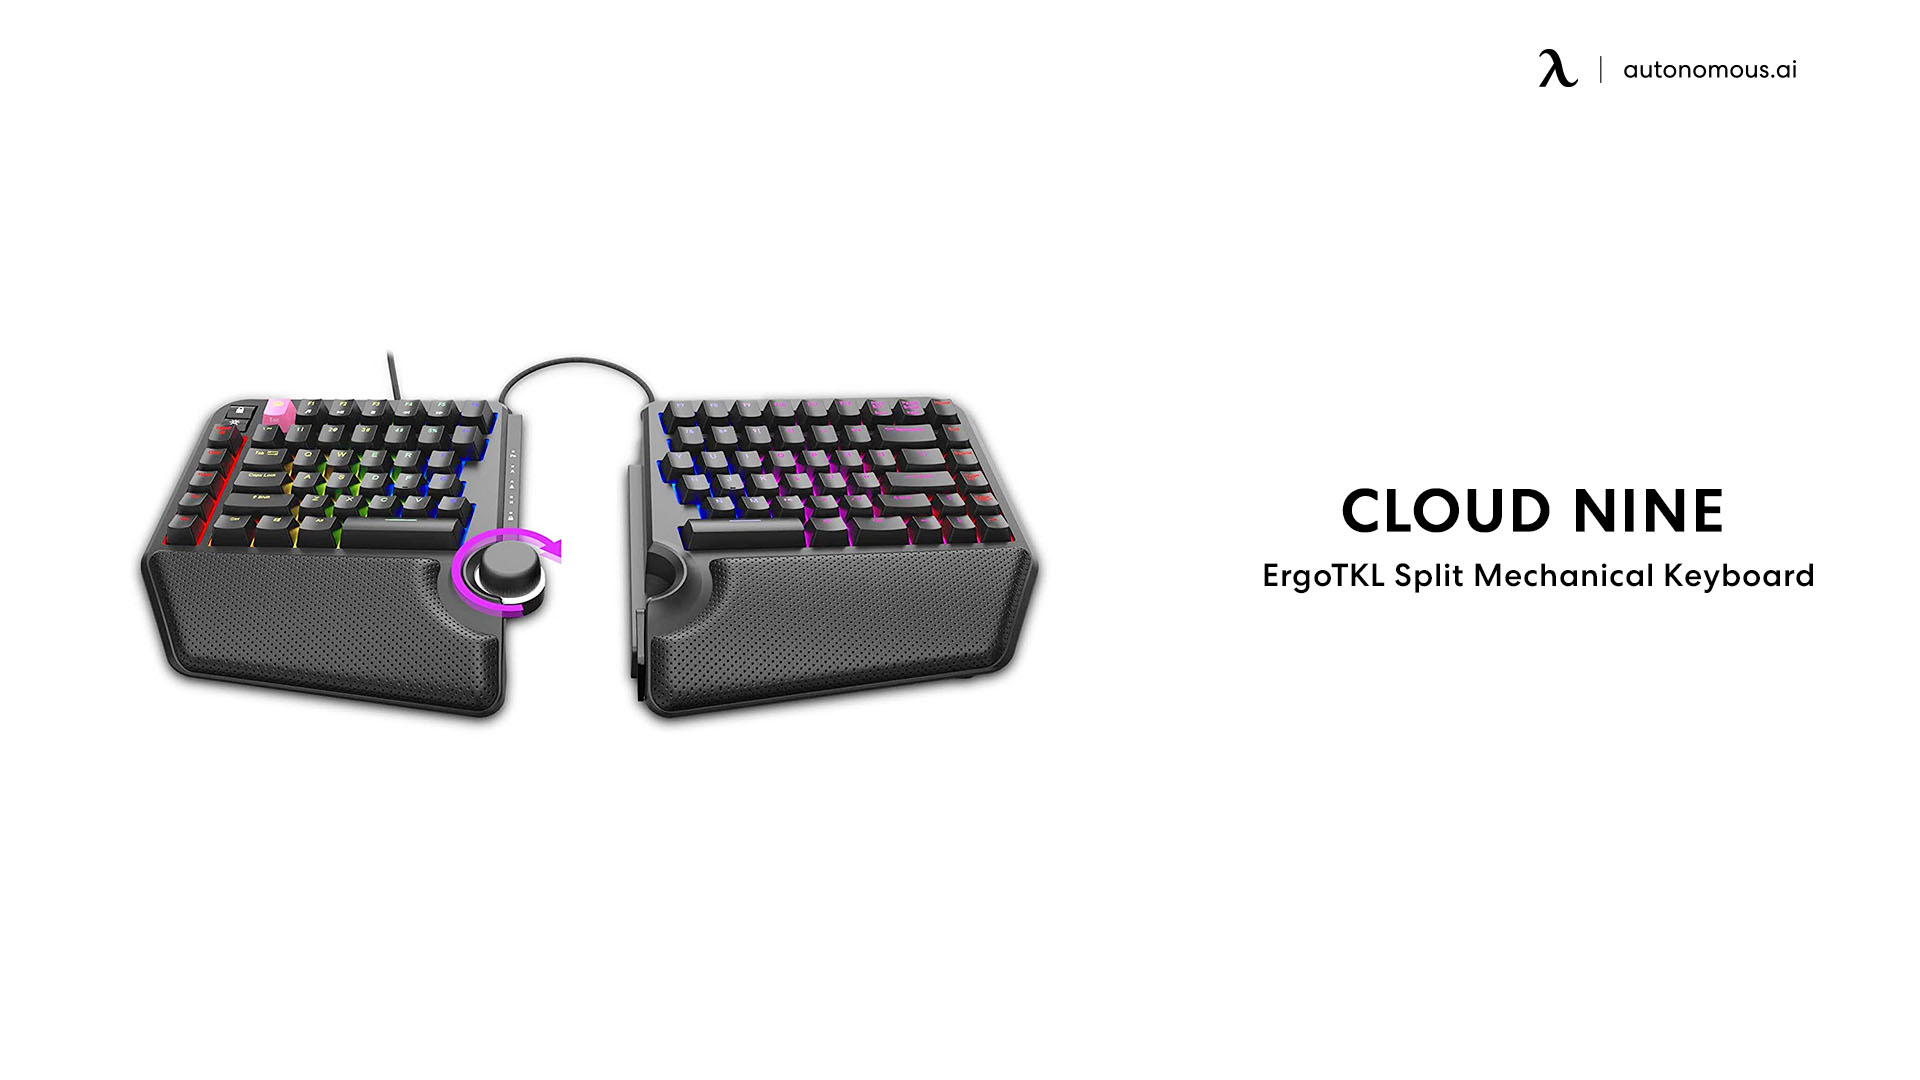 ErgoTKL Split Mechanical Keyboard by Cloud Nine